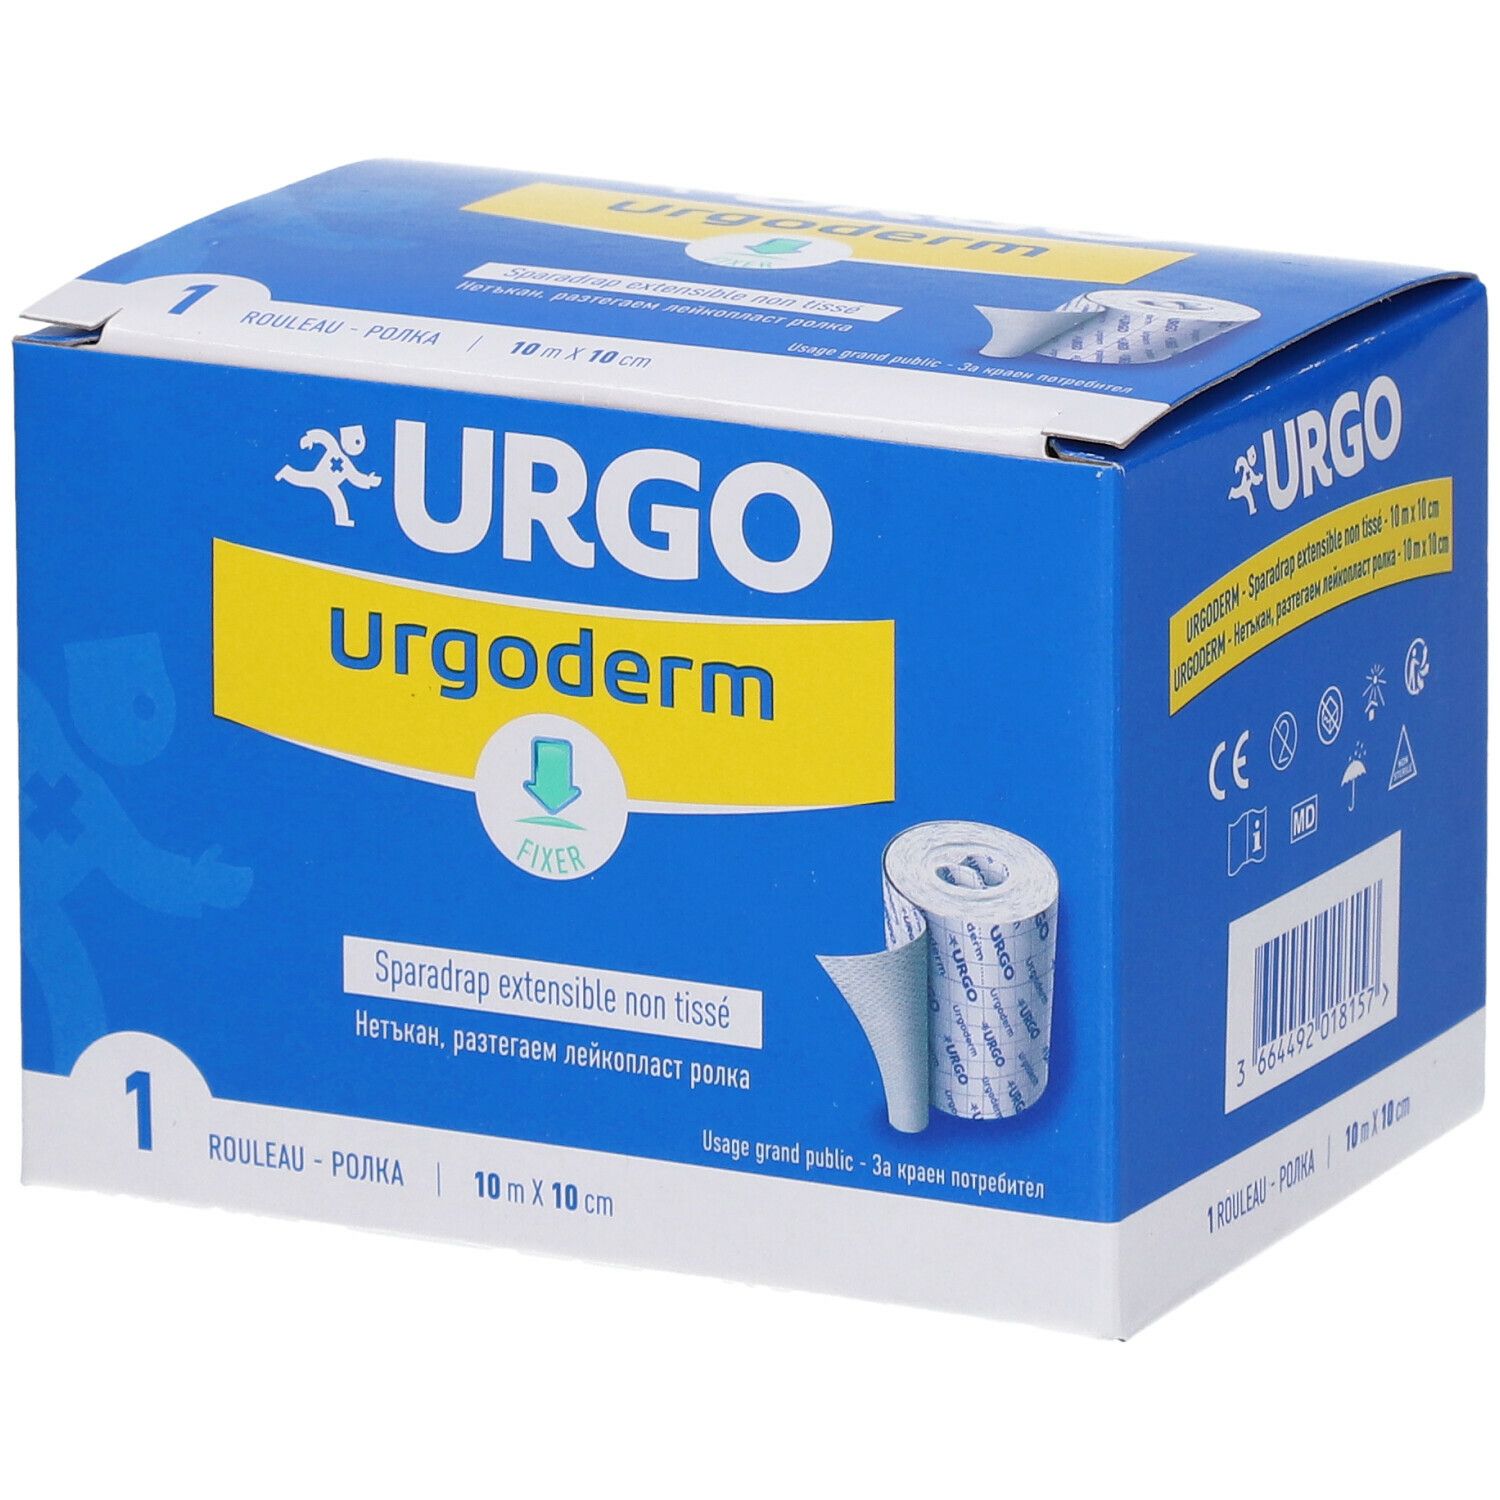 Urgo Urgoderm Sparadrap non tissé extensible 10 m x 10 cm